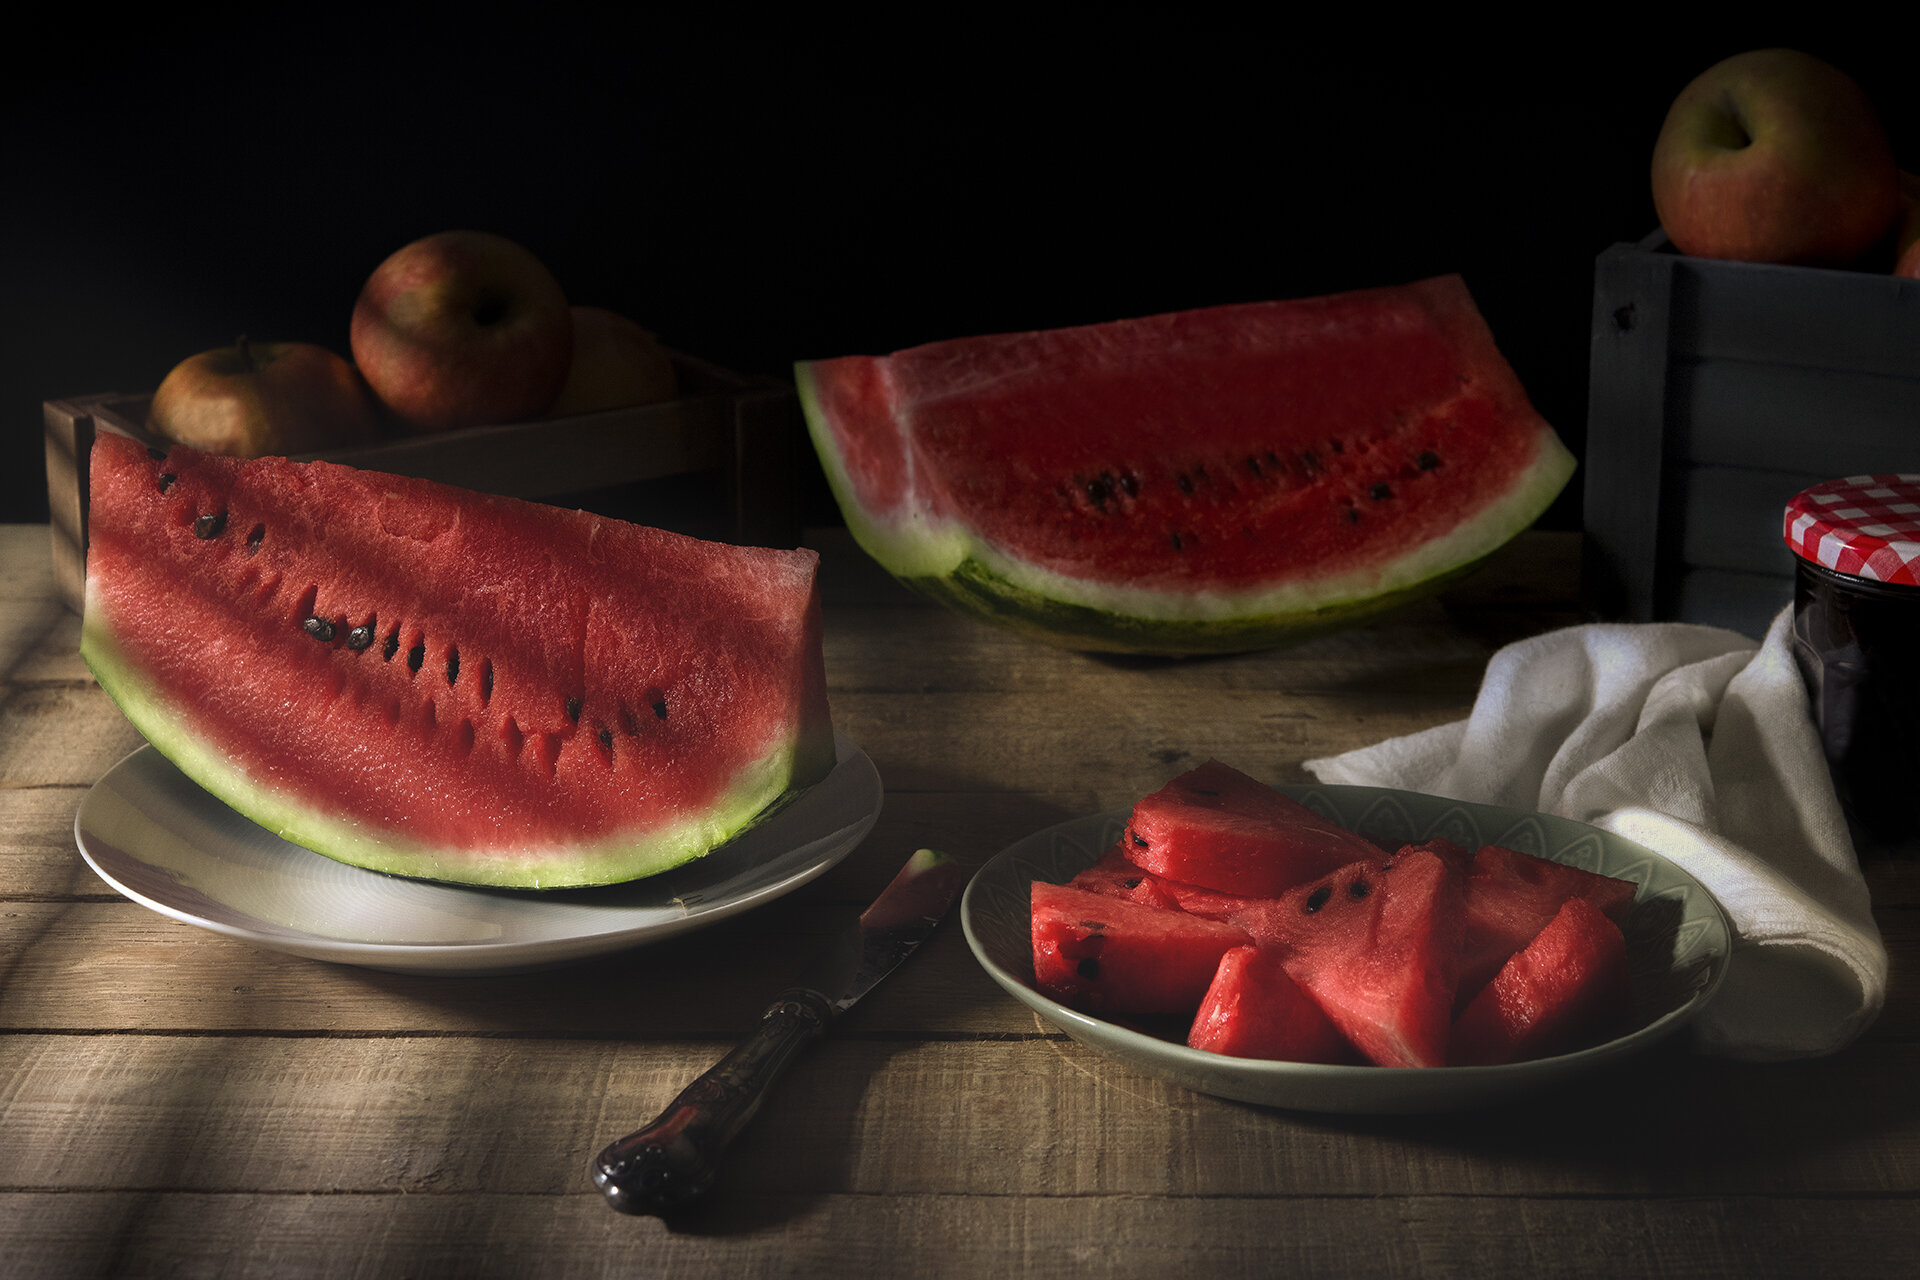 watermelon&apples+.jpg